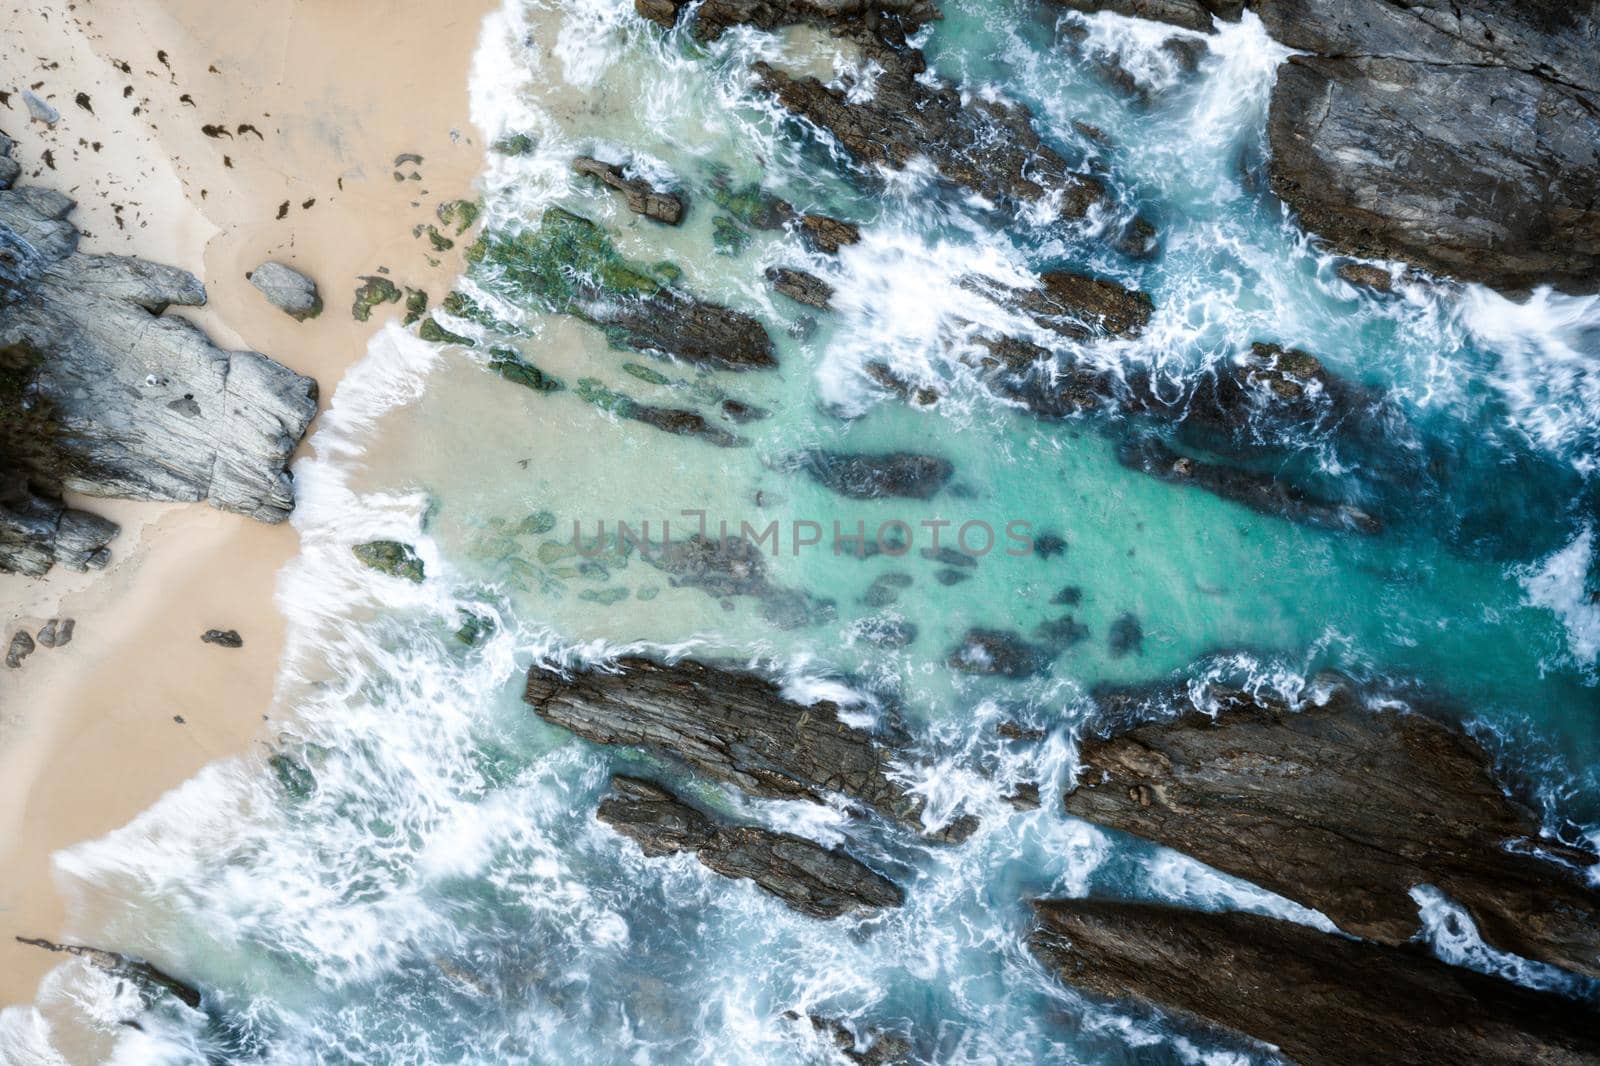 The many rocky beaches around the Narooma coastline in Australia